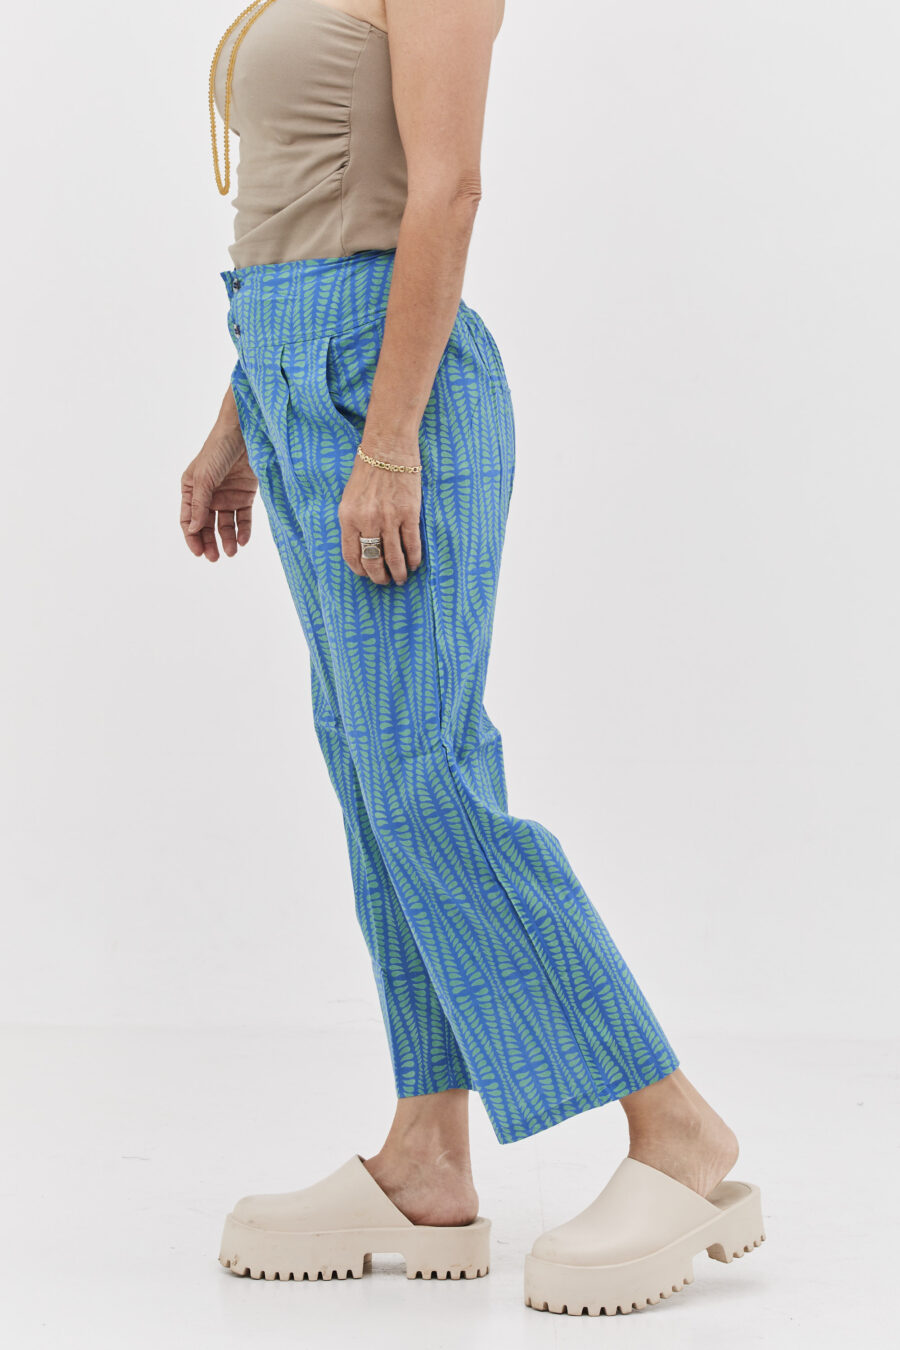 Jed pants | Uniquely designed pants – Blue Agam print, blue pants with light green geometric print